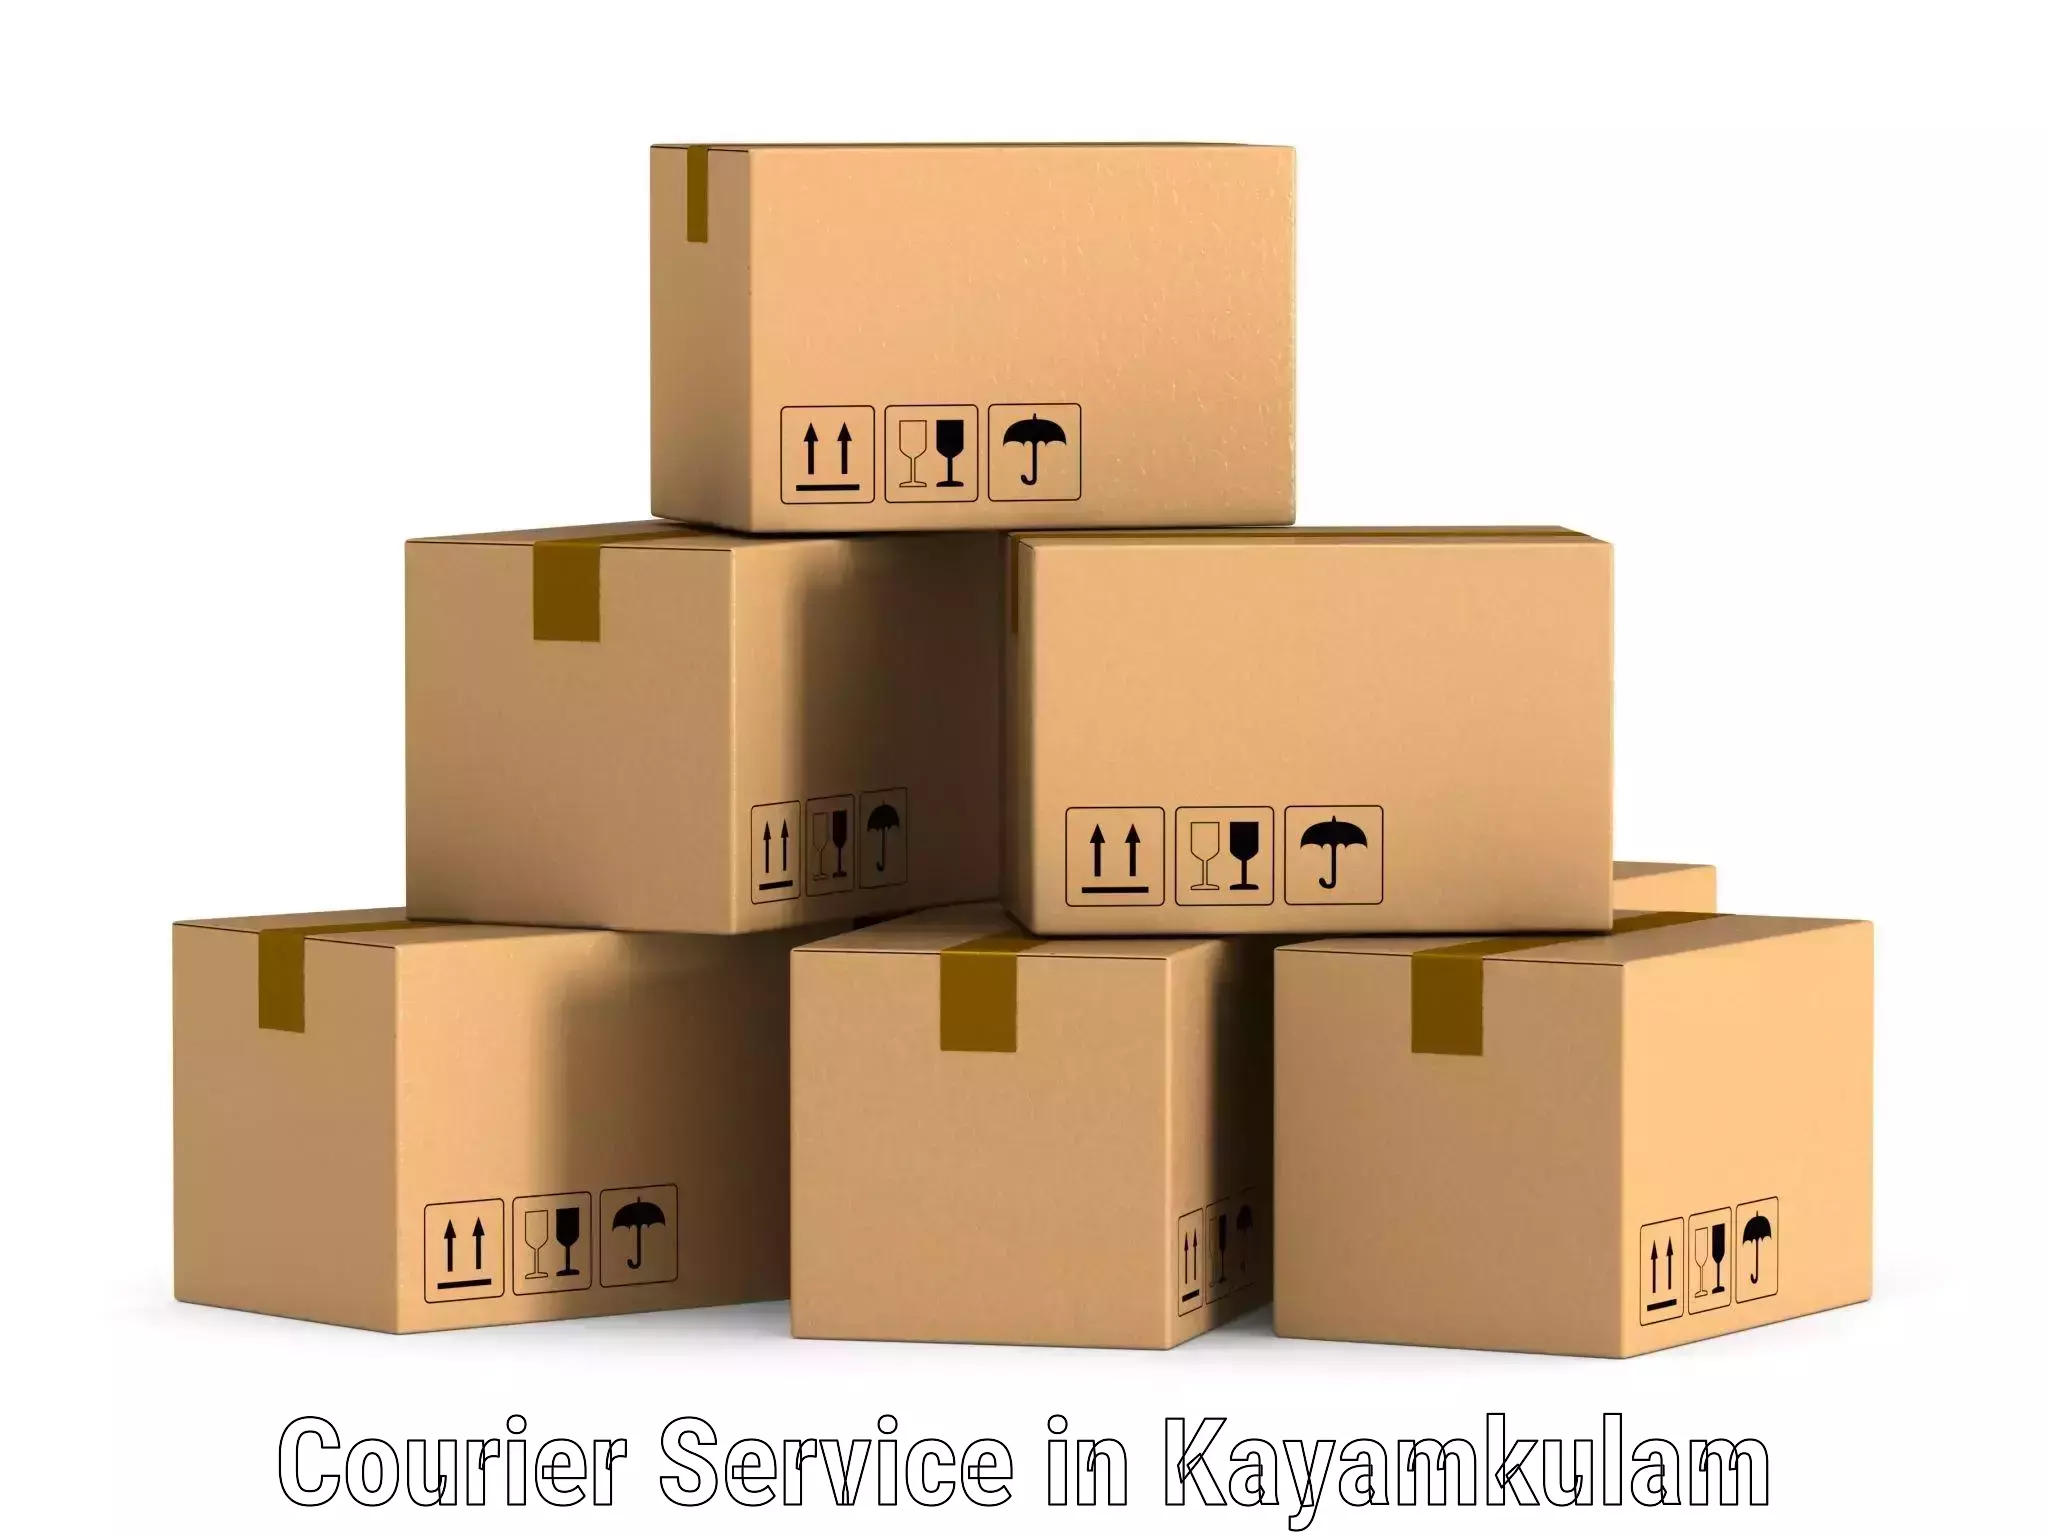 Courier service partnerships in Kayamkulam